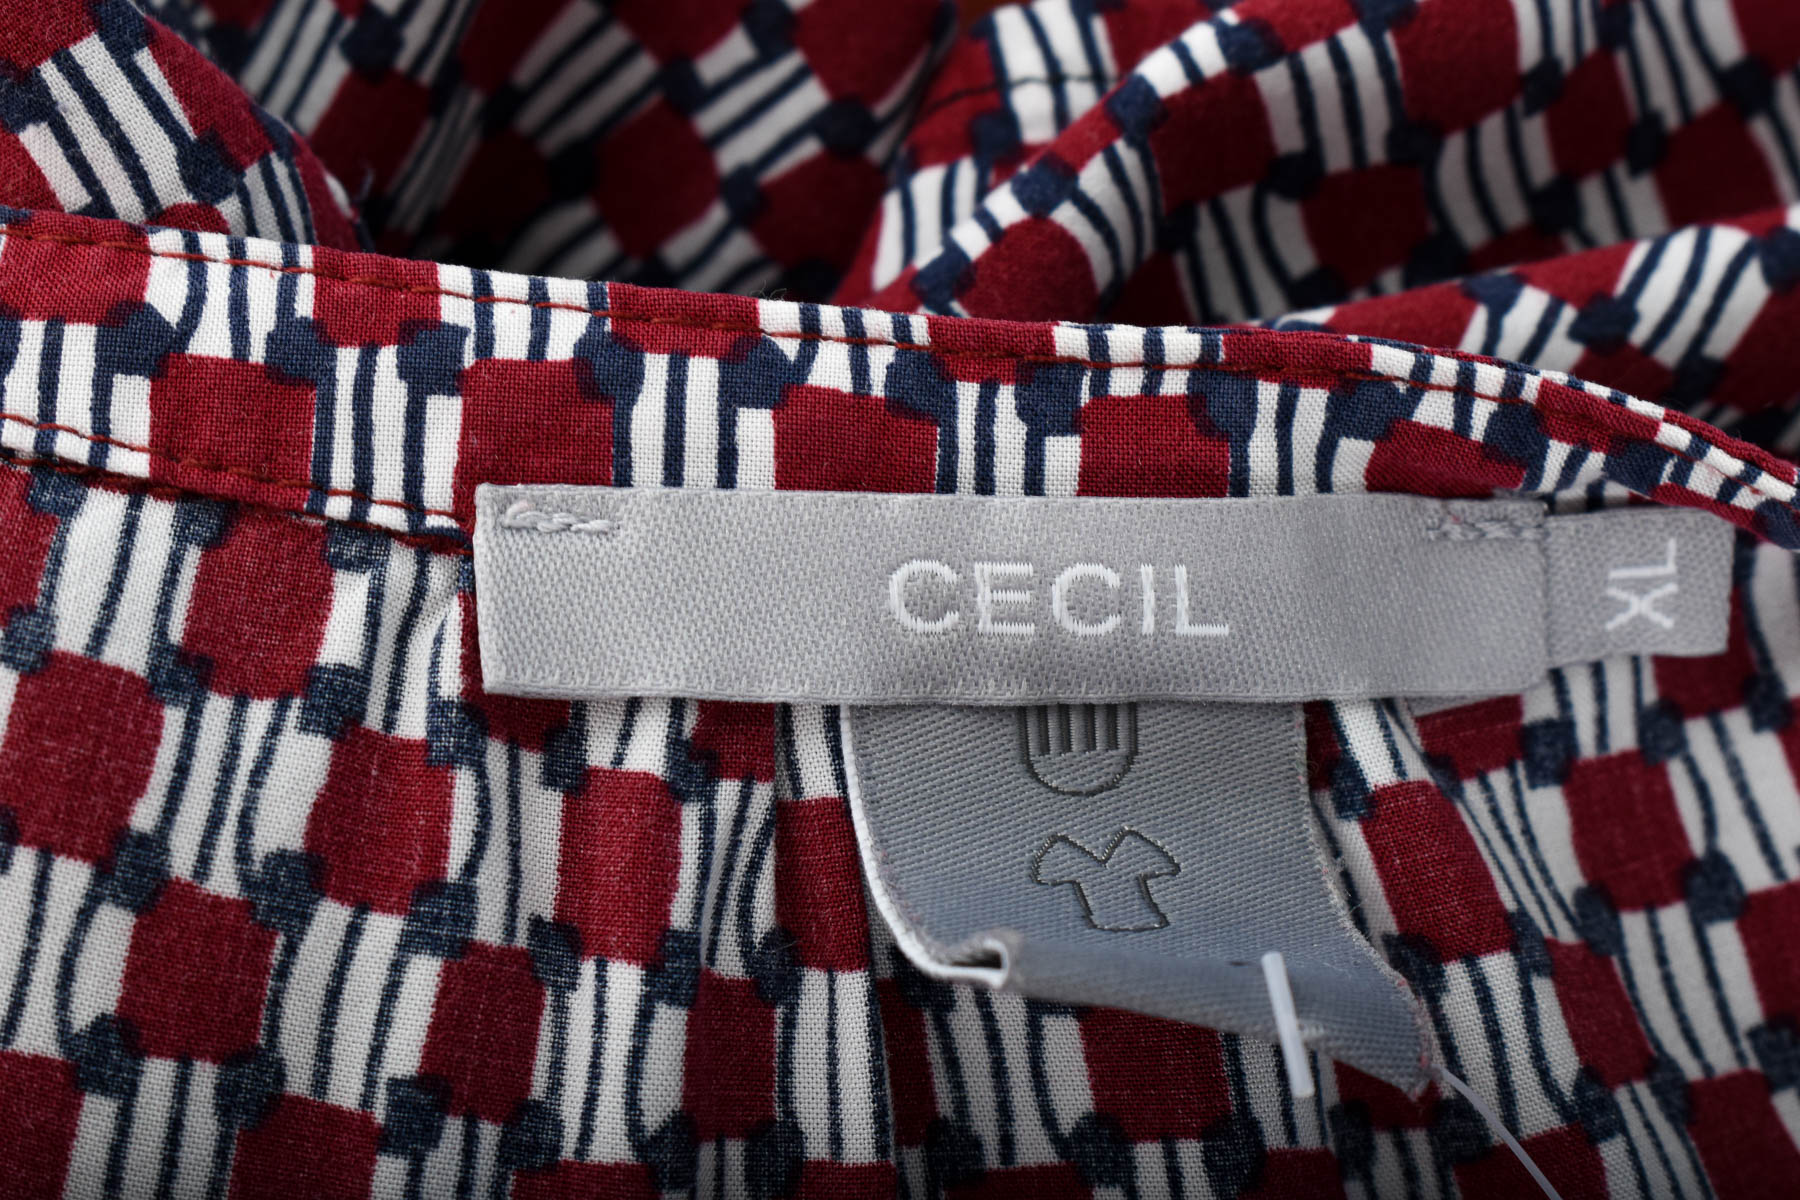 Дамска риза - CECIL - 2